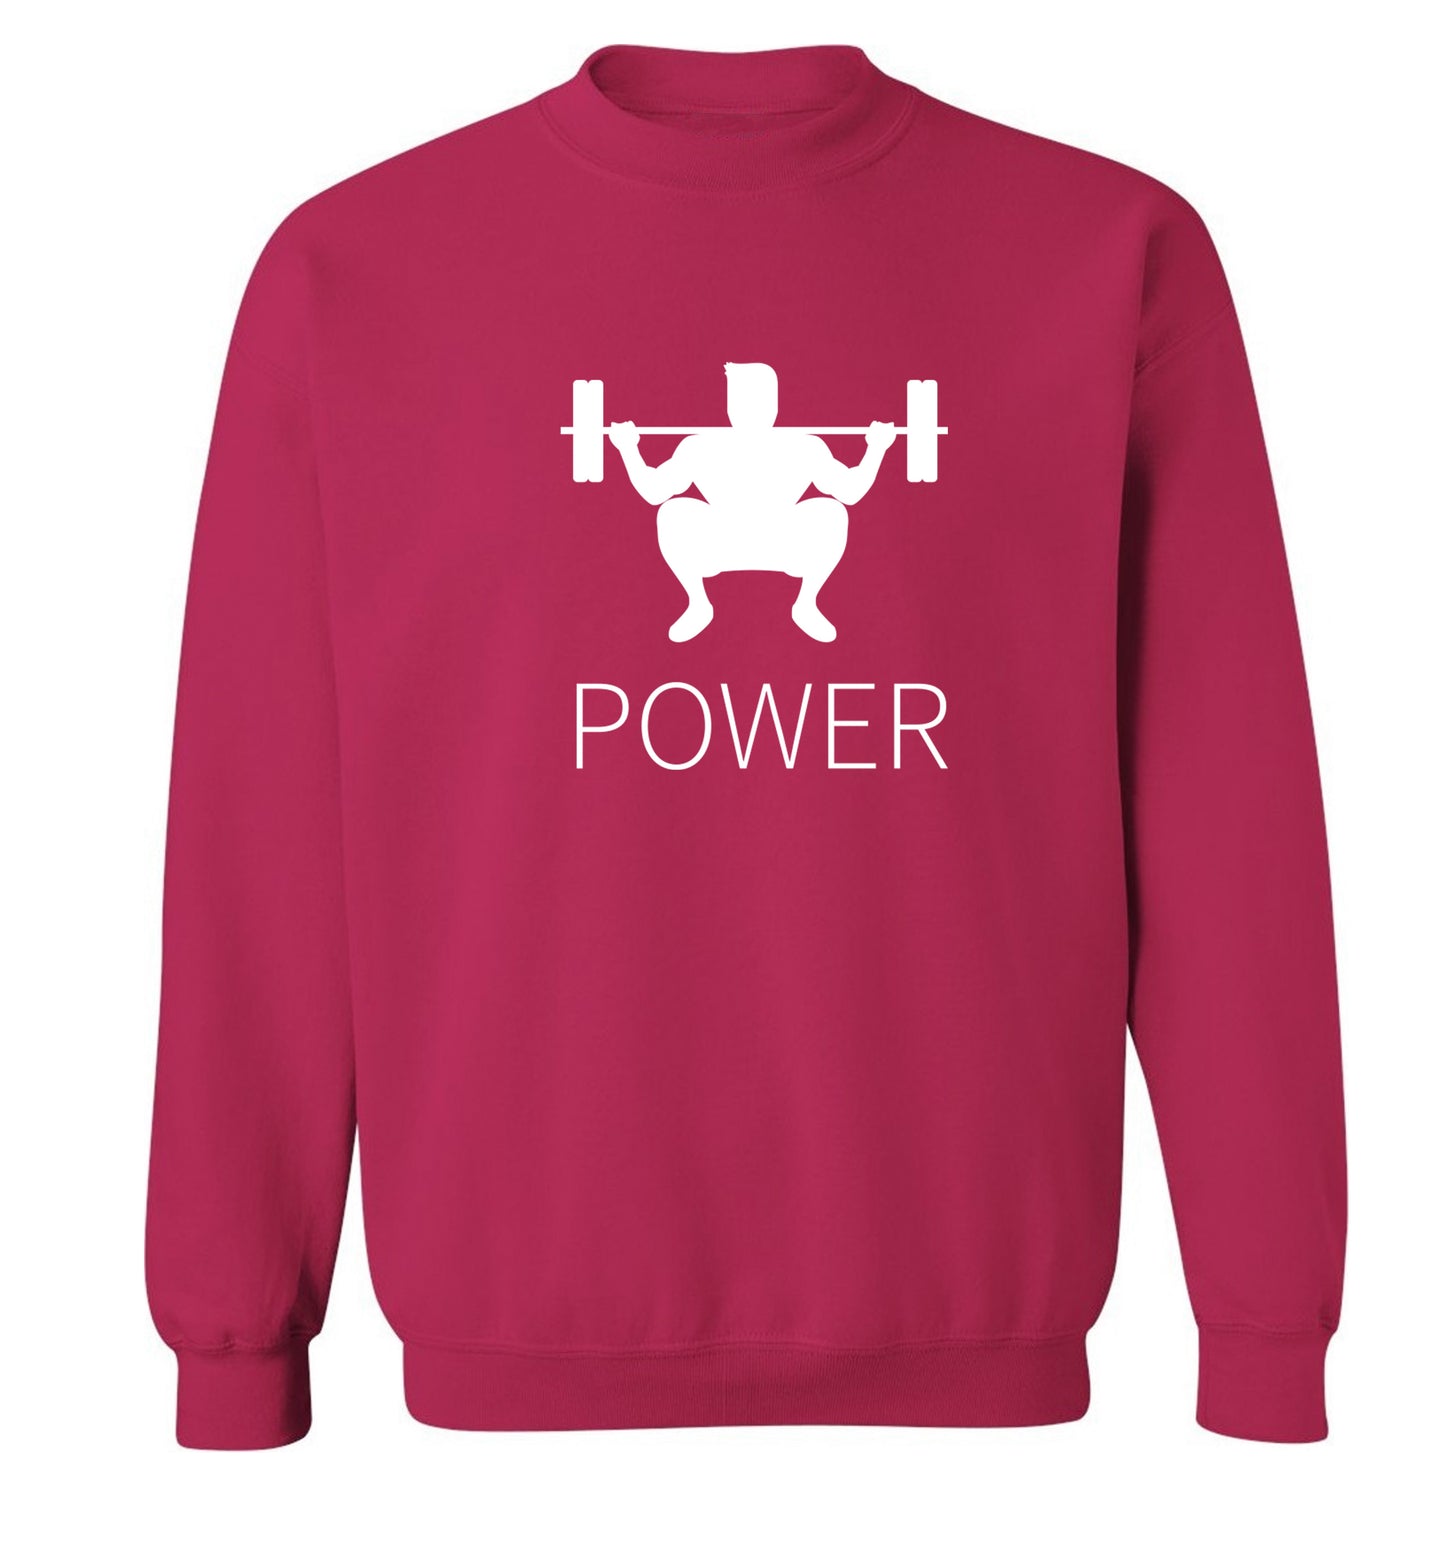 Lift power Adult's unisex pink Sweater 2XL